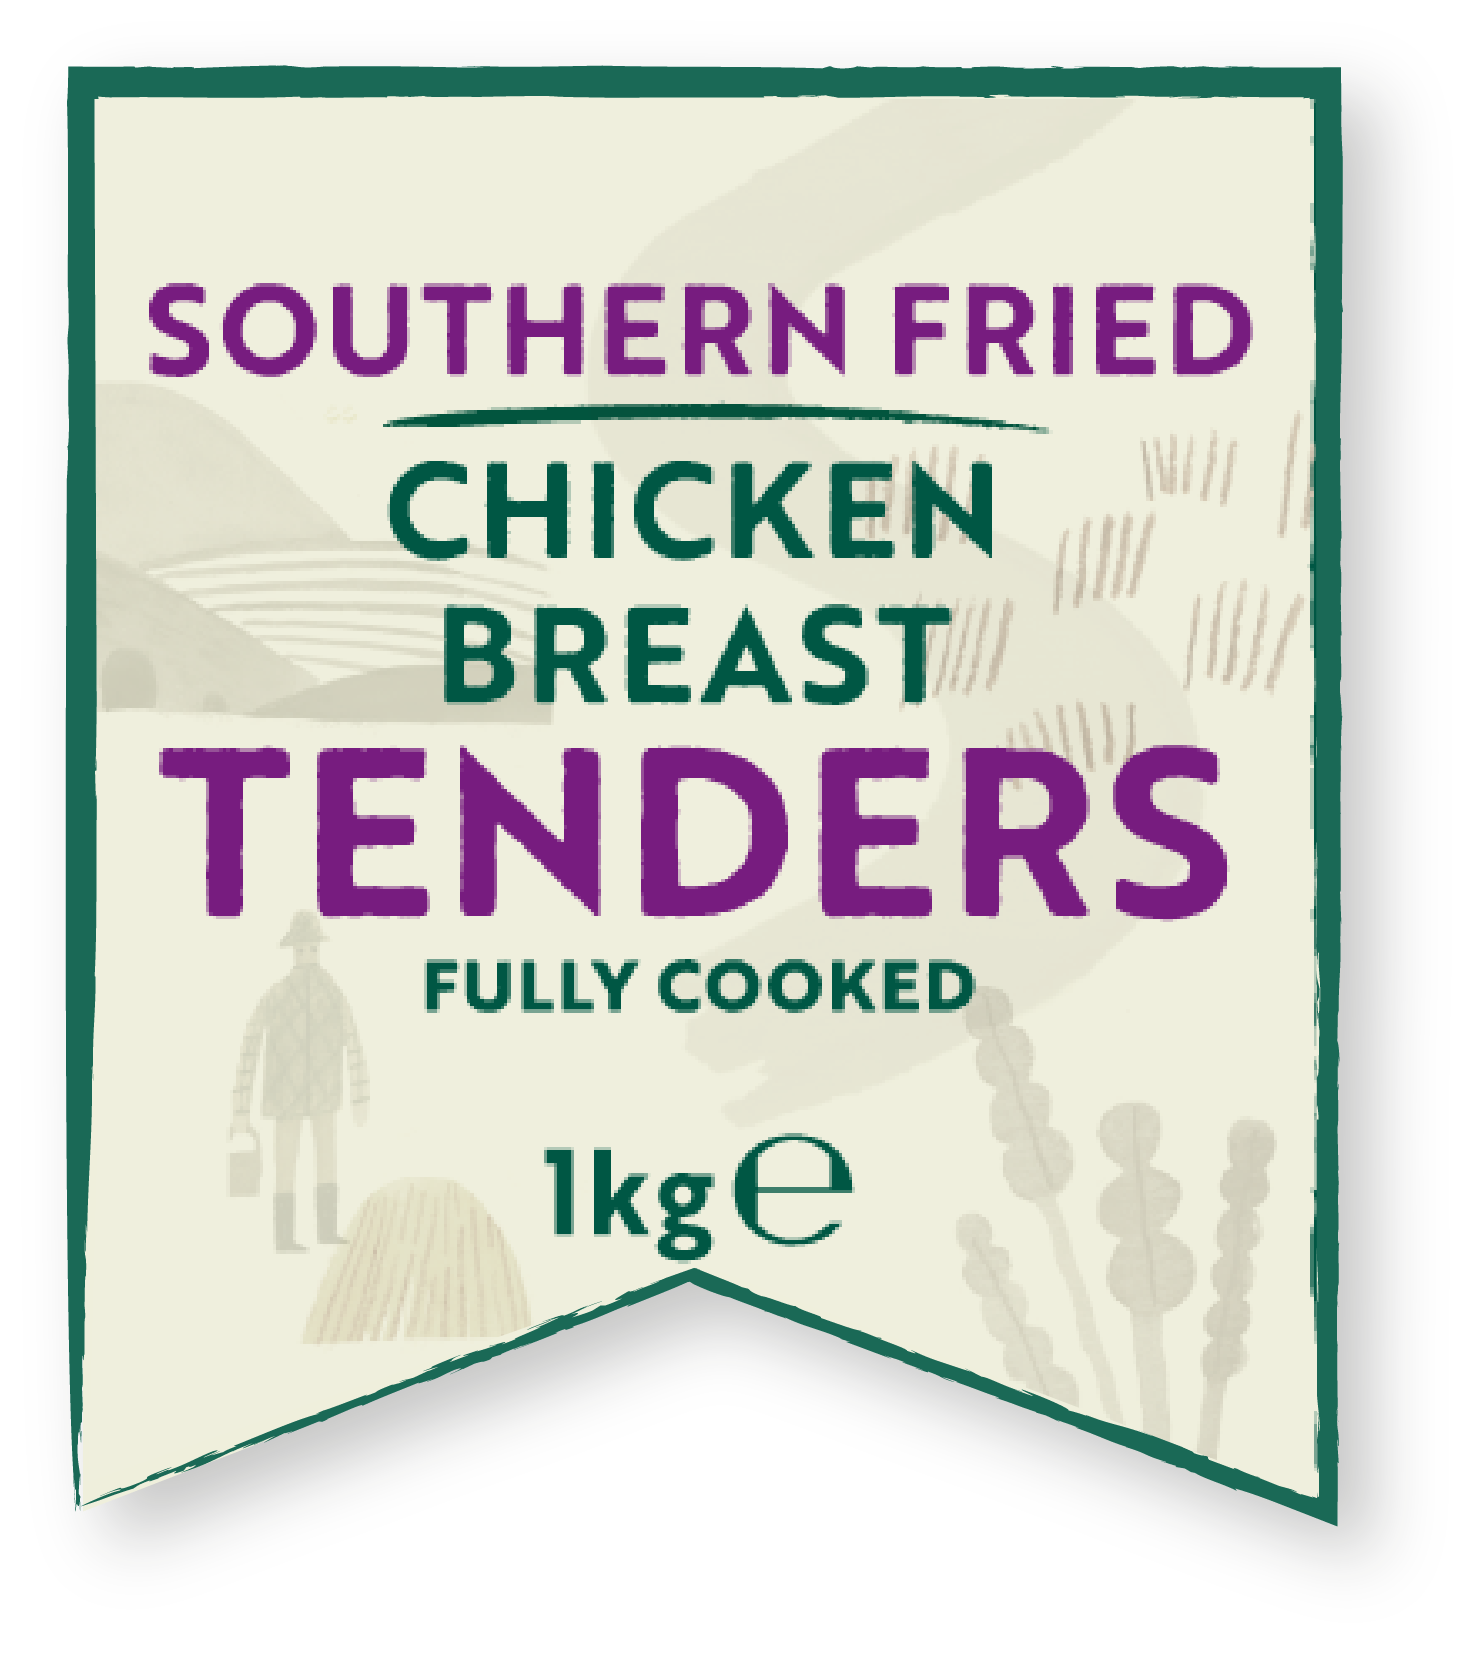 Southern fried chicken breast tenders